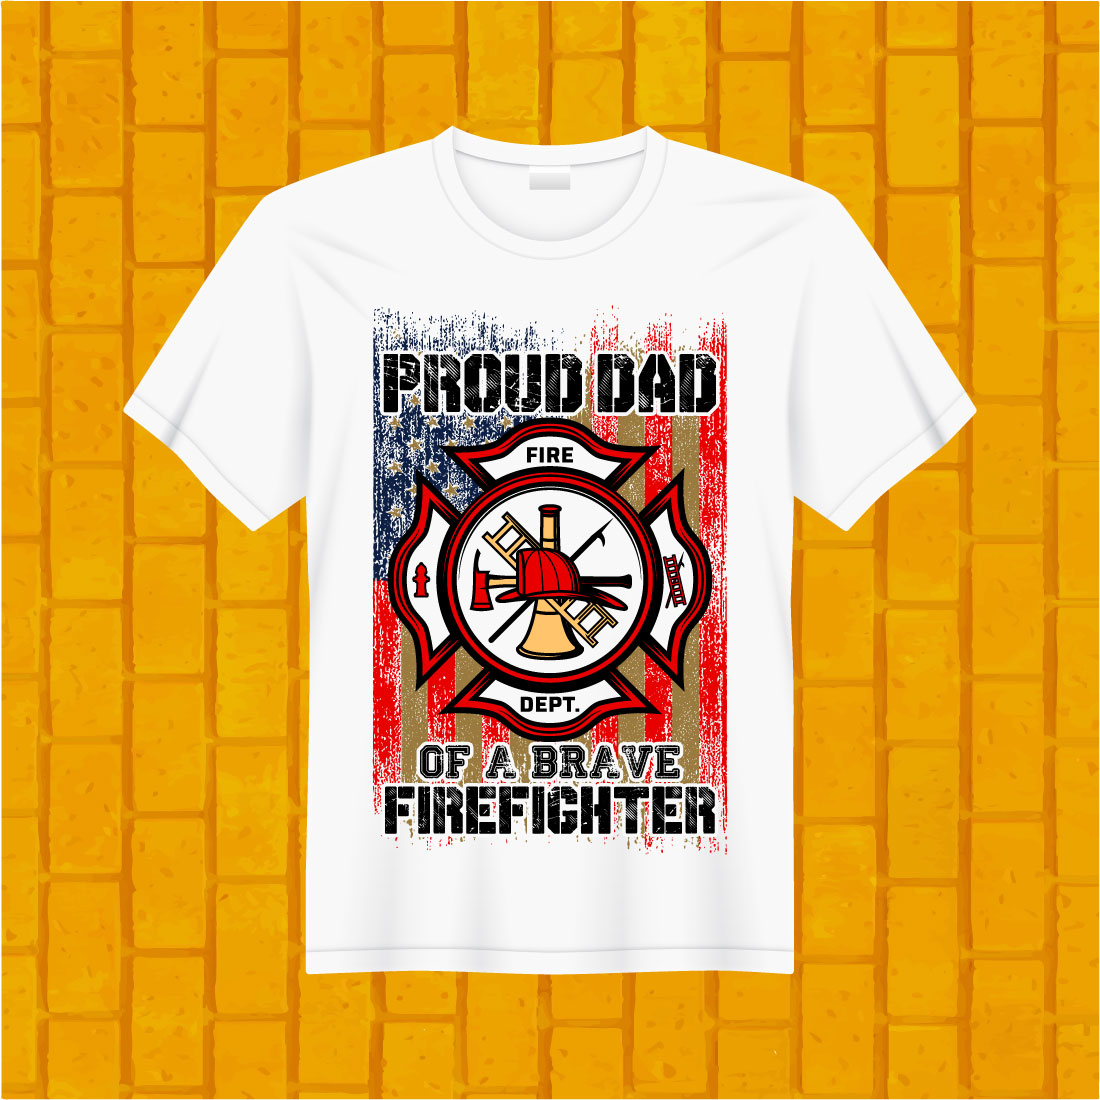 T-shirt Firefighter Design Bundle preview image.